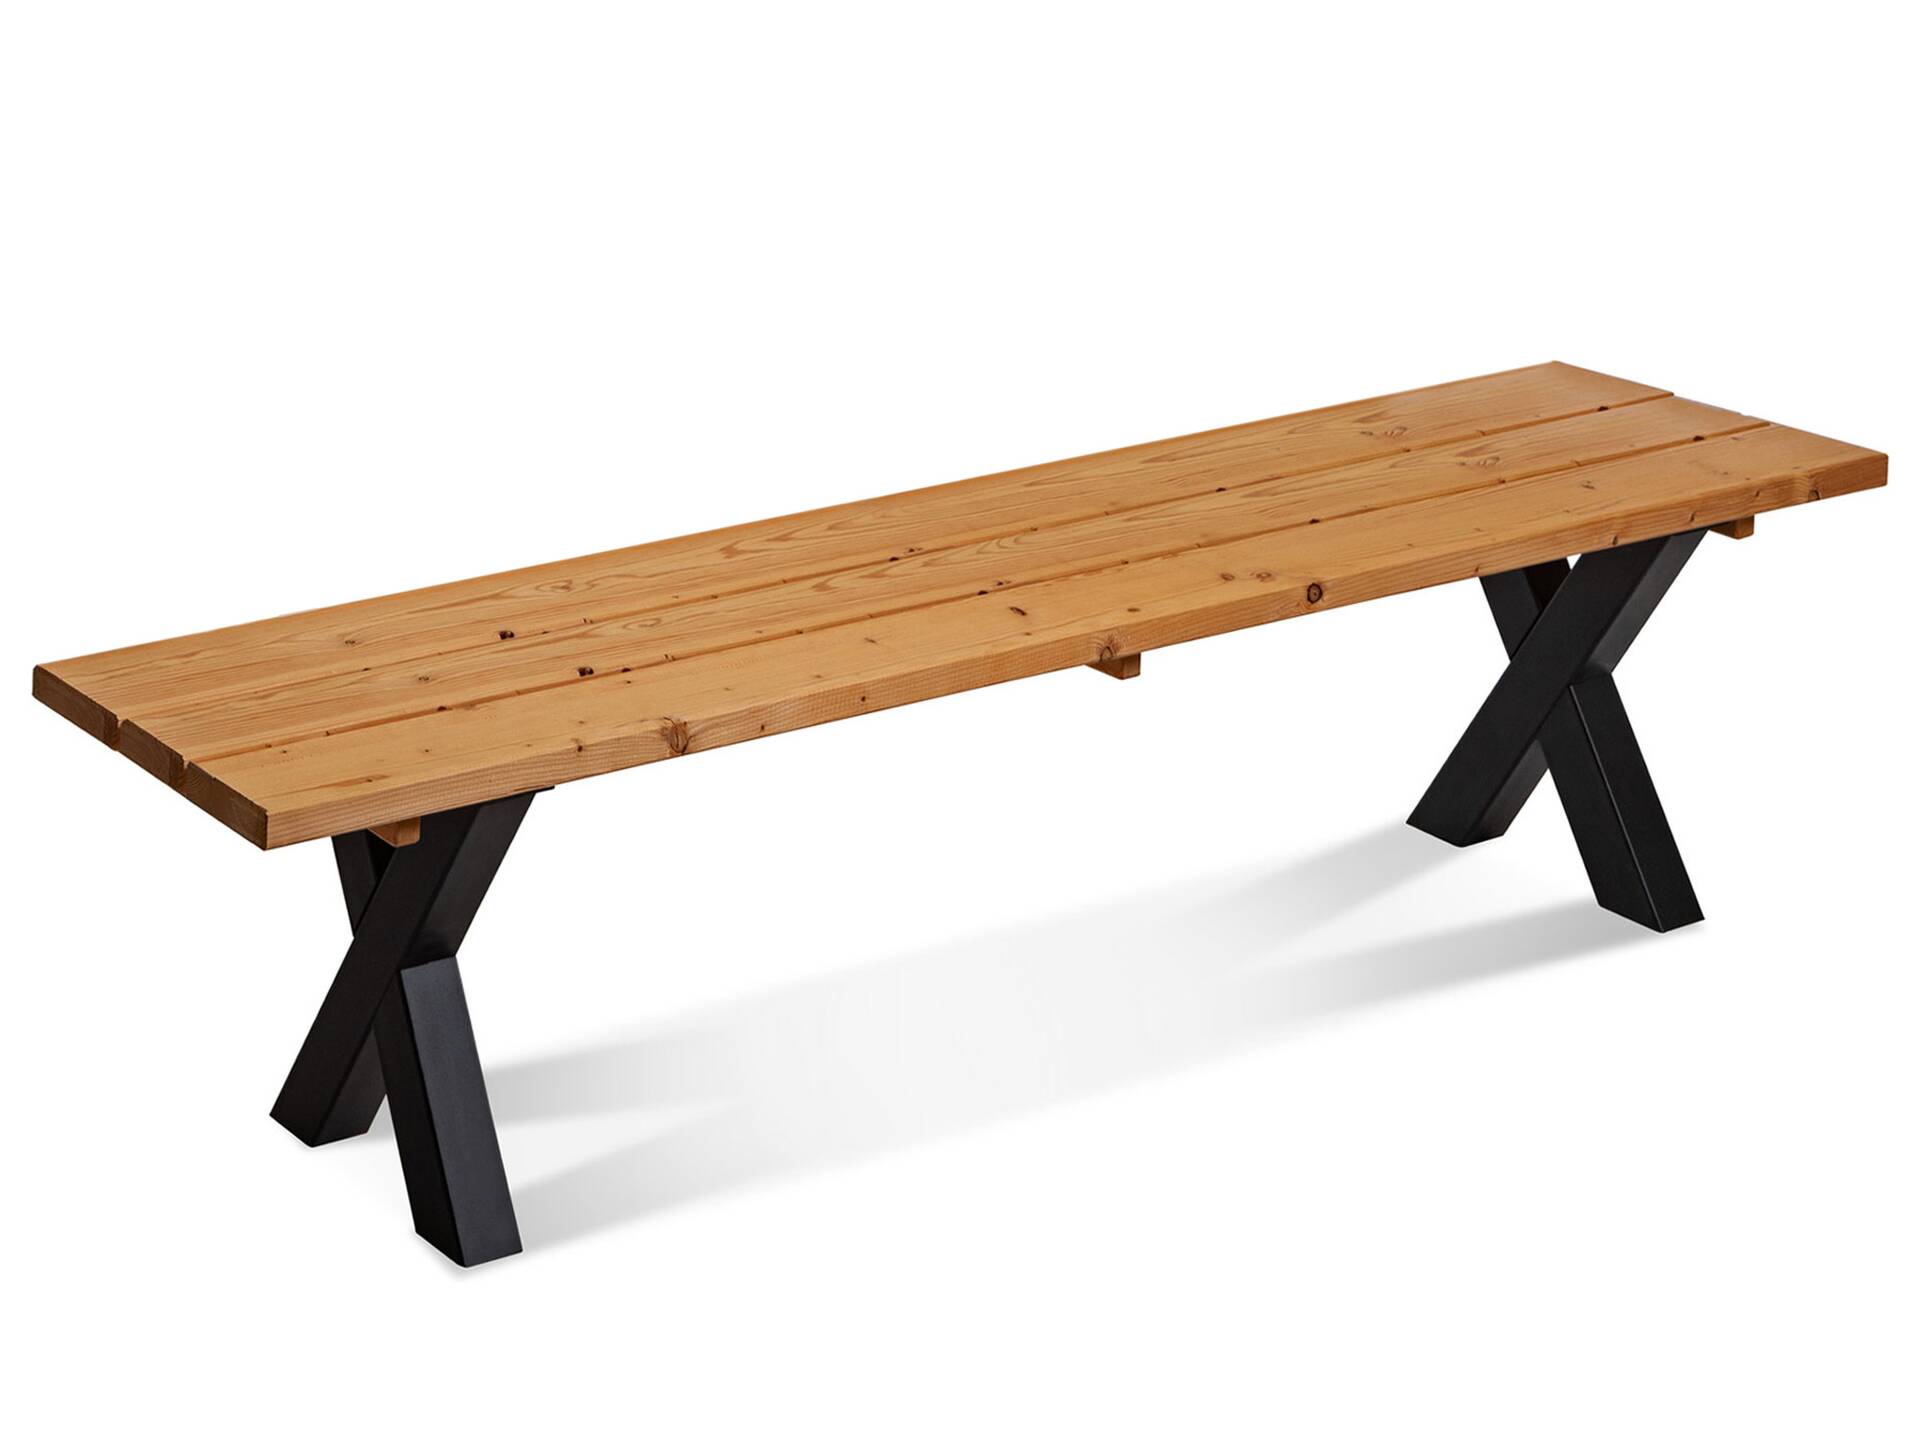 KENTUCKY Sitzbank / Gartenbank mit X-Beinen, Altholzoptik, Material Massivholz, THERMO-Fichte lackiert 160 cm | ohne Rückenlehne | natur